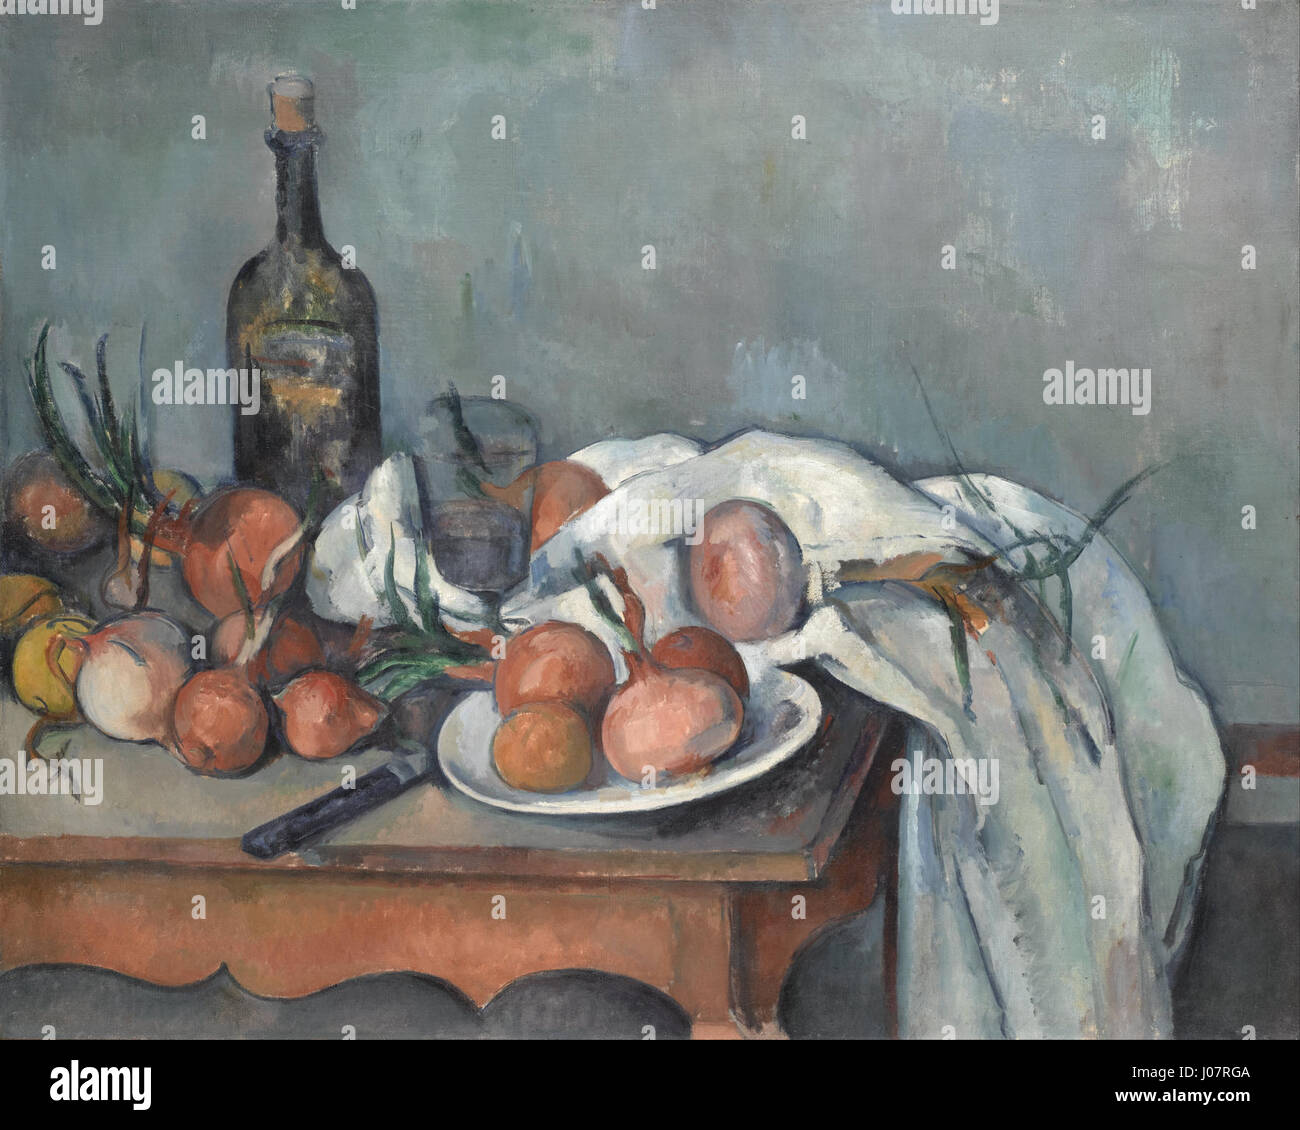 Paul Cézanne - Still Life with Onions - Stock Photo